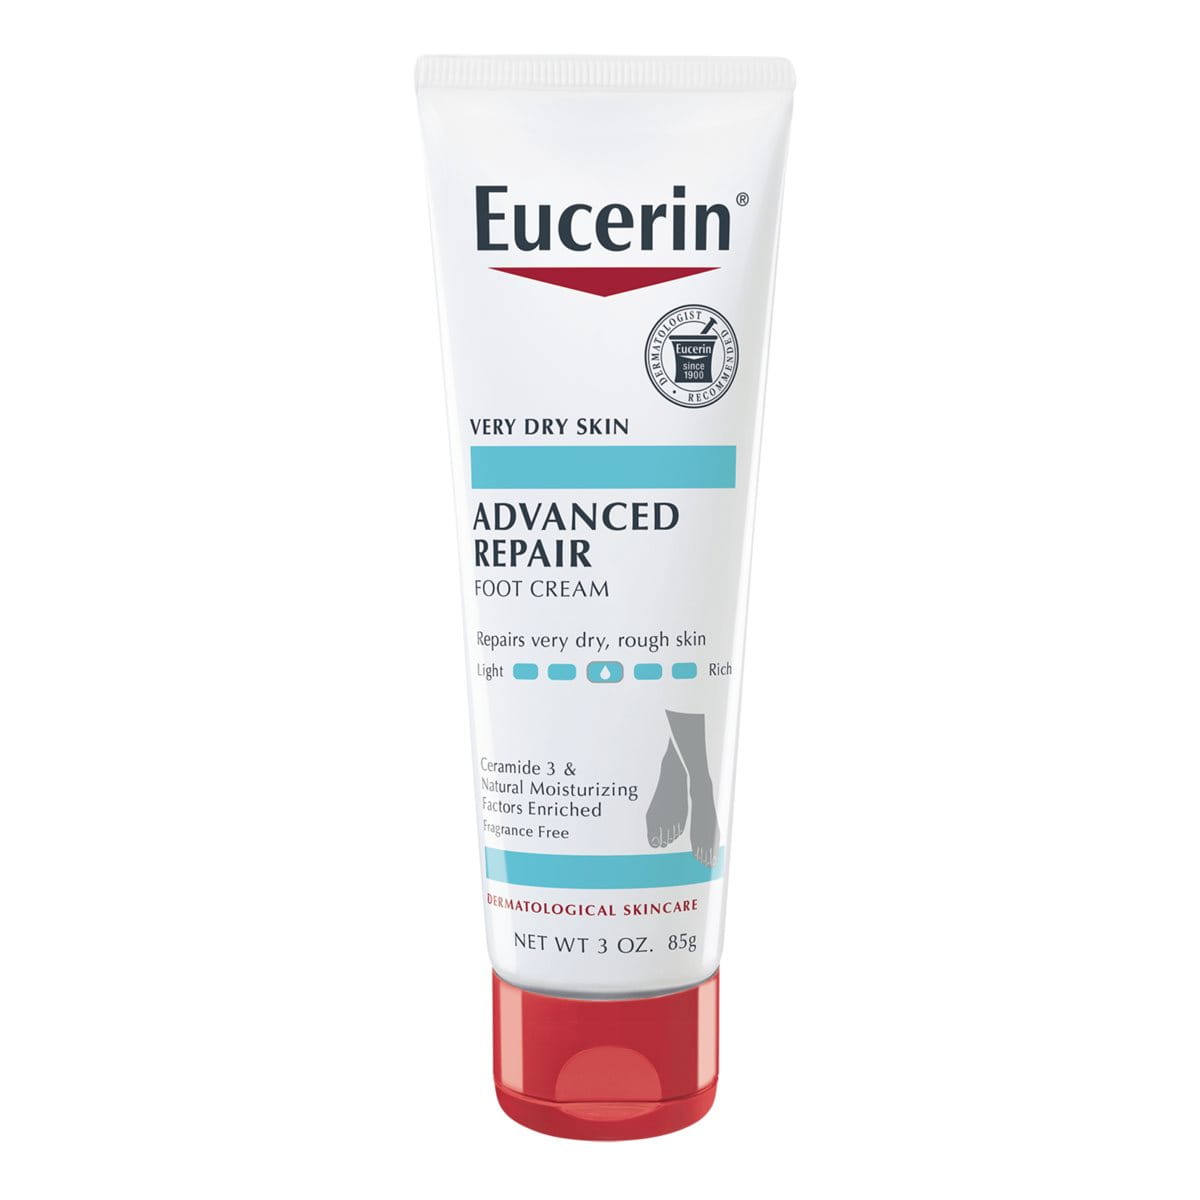 Konflikt lejlighed Skyldig Eucerin Advanced Repair Foot Cream, Unscented Foot Cream